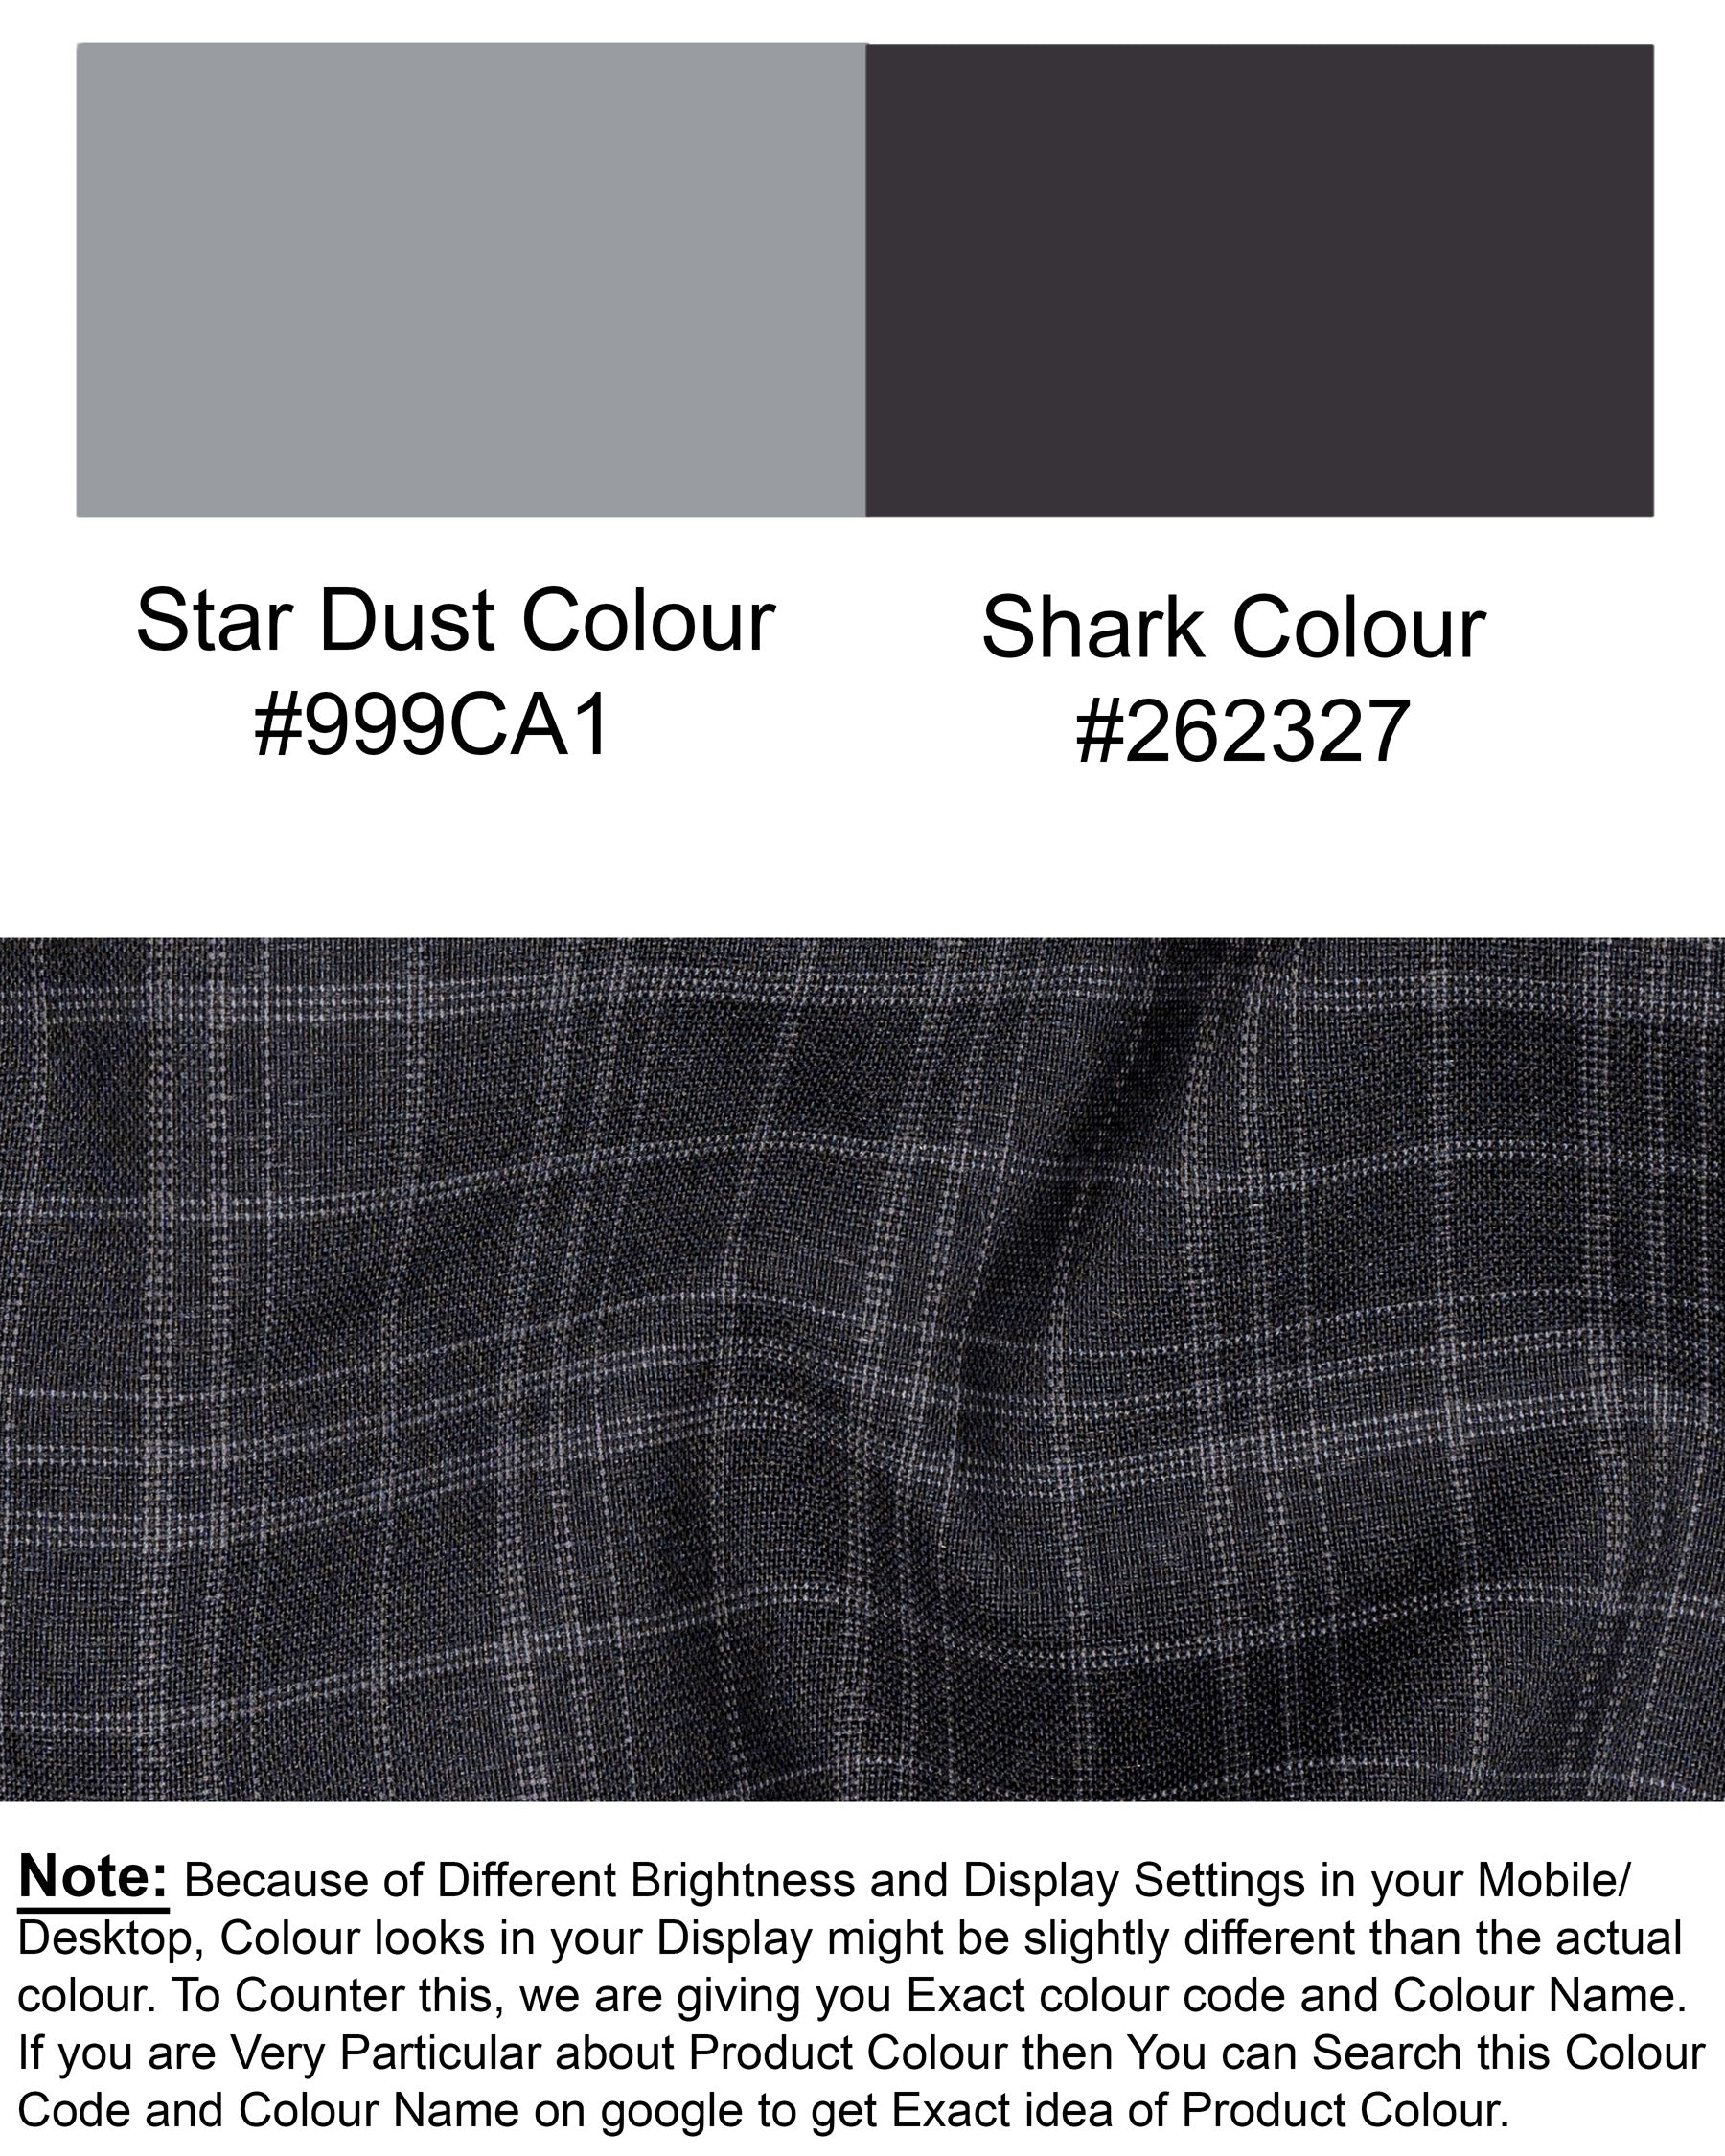 Star Dust and Shark Grey Plaid Cross Button Bandhgala Wool rich Suit ST1408-CBG-36, ST1408-CBG-38, ST1408-CBG-40, ST1408-CBG-42, ST1408-CBG-44, ST1408-CBG-46, ST1408-CBG-48, ST1408-CBG-50, ST1408-CBG-52, ST1408-CBG-54, ST1408-CBG-56, ST1408-CBG-58, ST1408-CBG-60